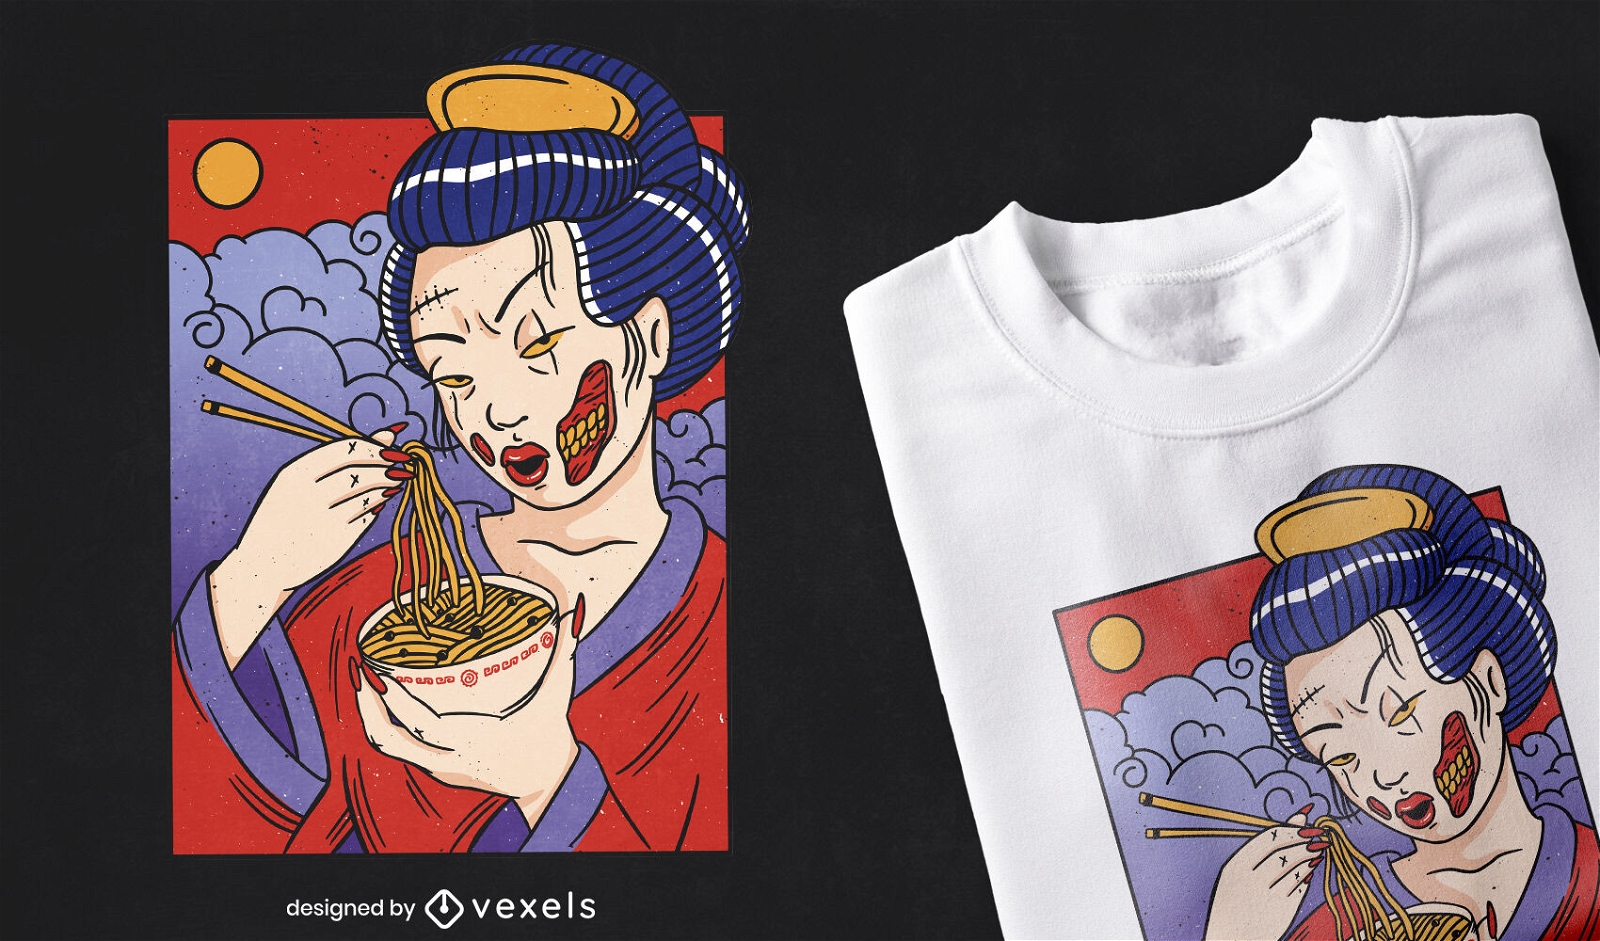 Genial diseño de camiseta zombie geisha